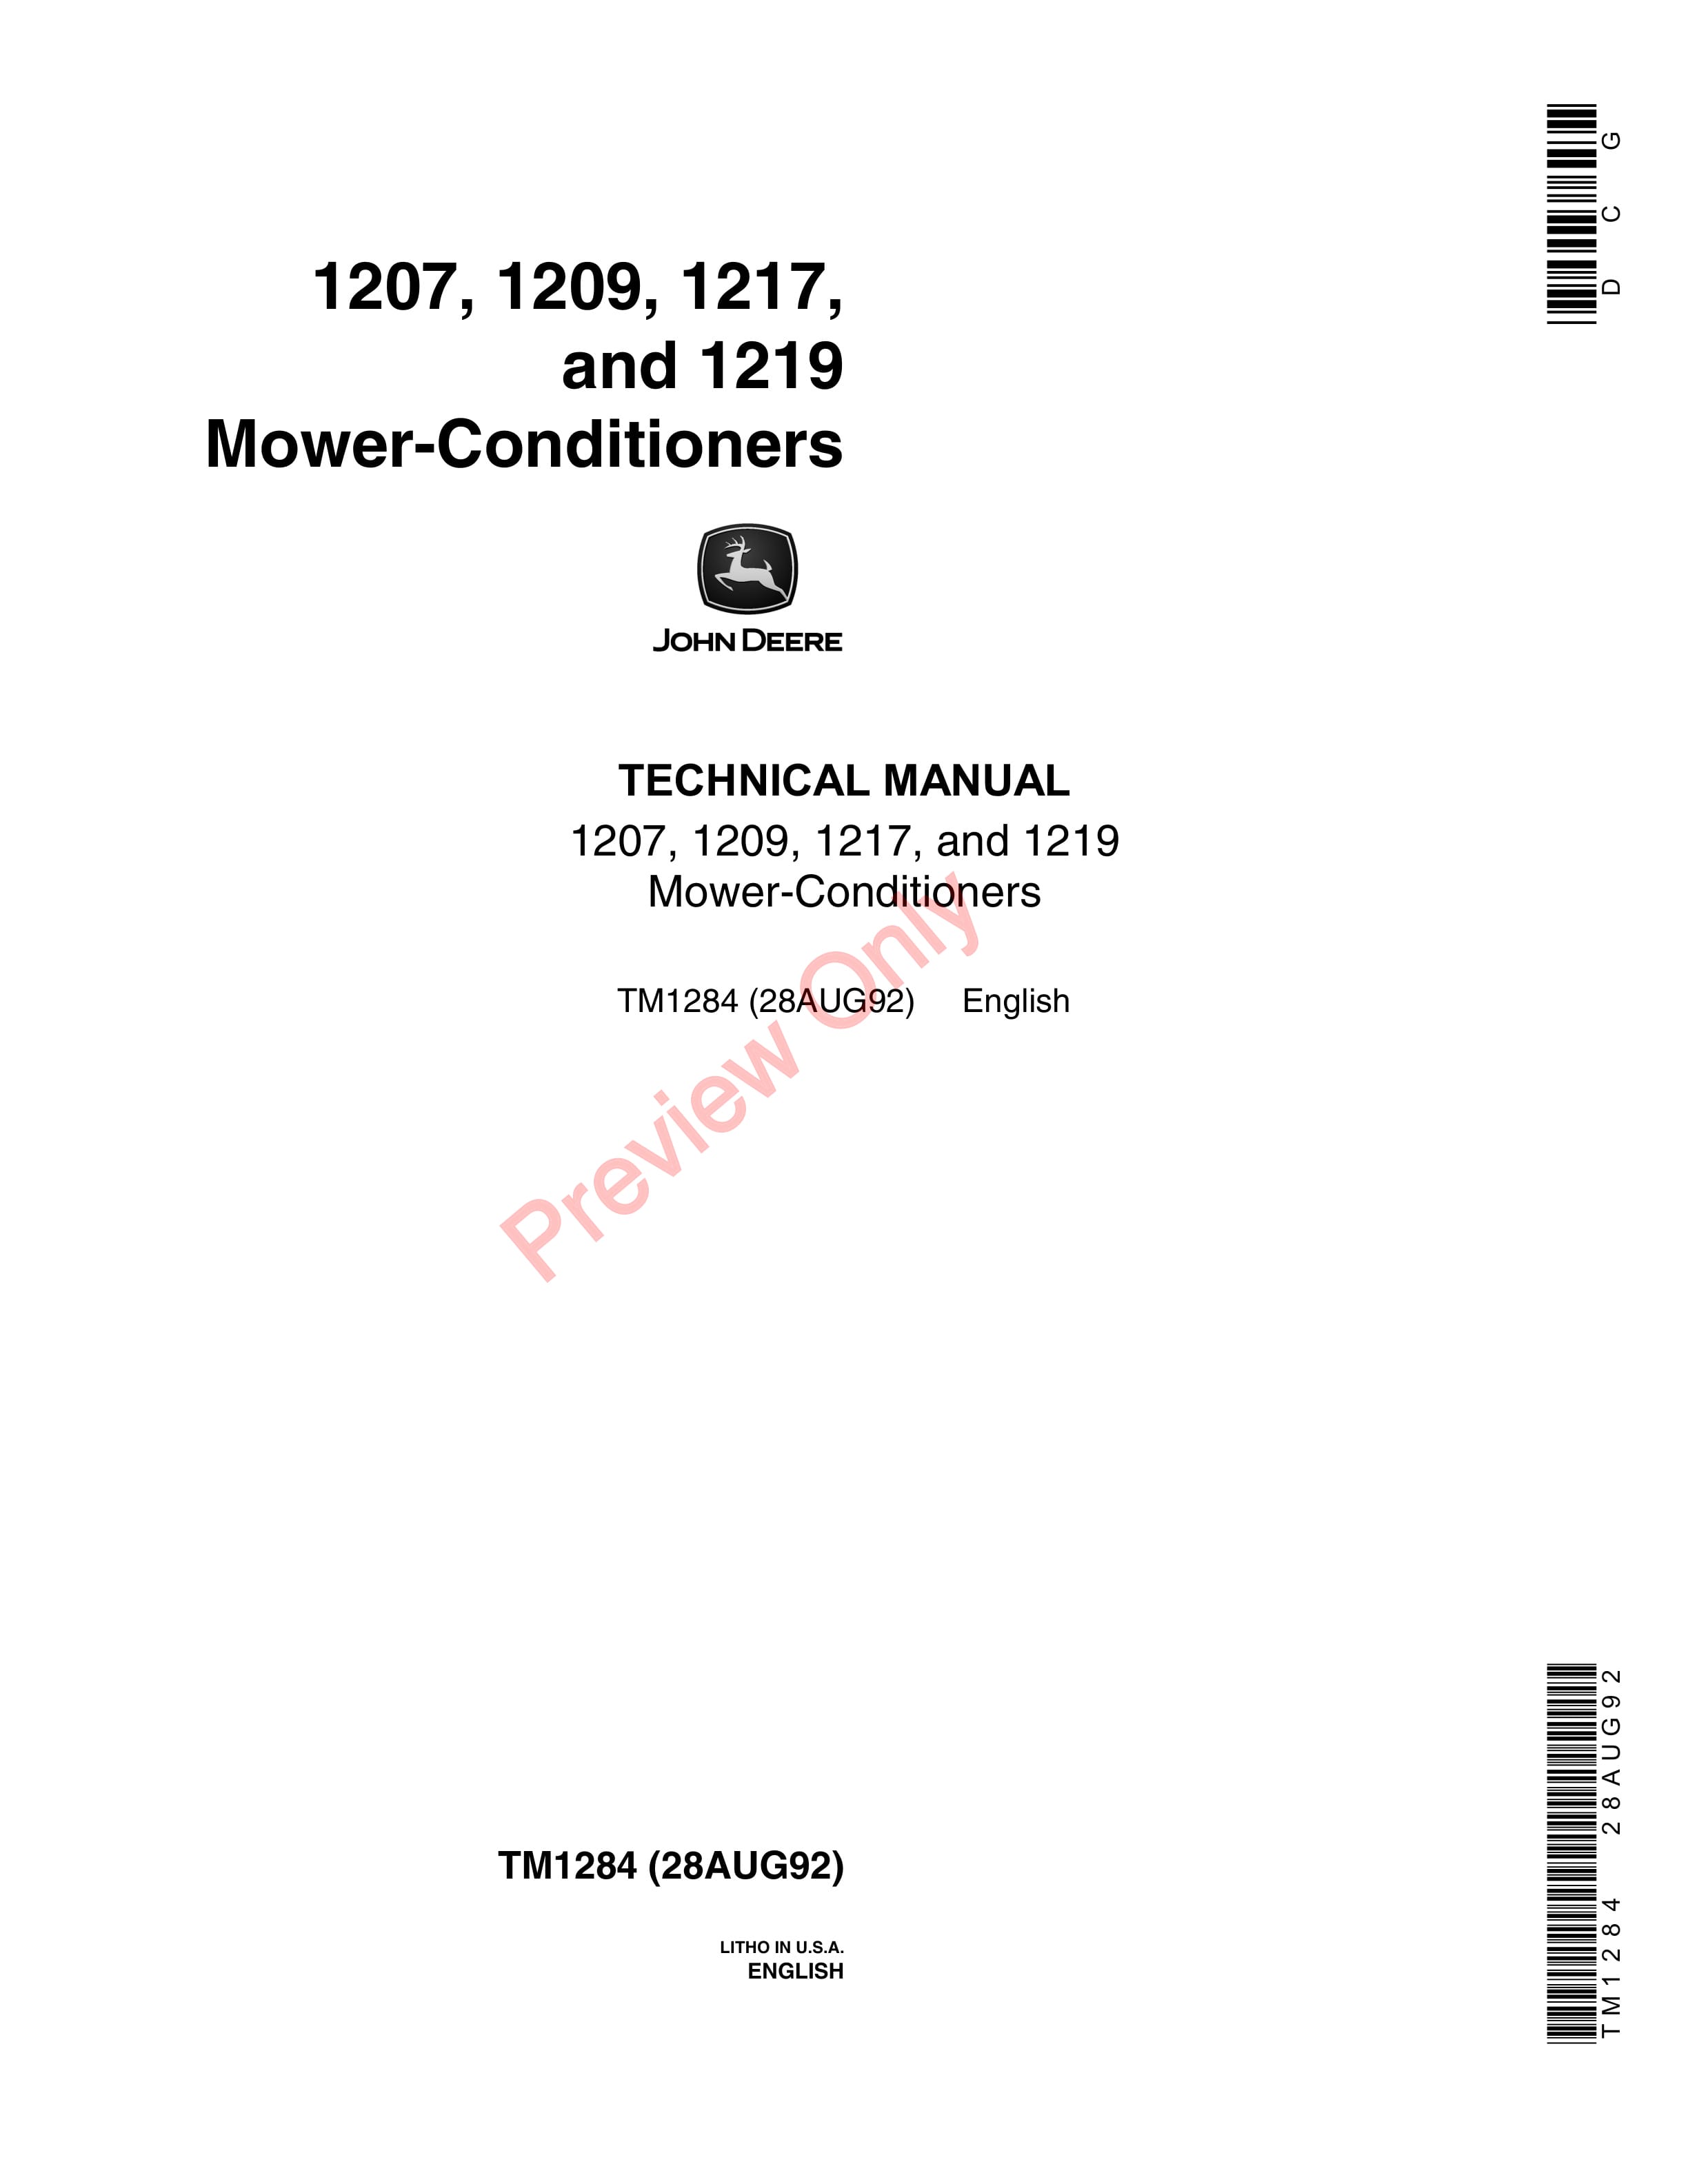 John Deere 1207 1209 1217 1219 Mower Conditioners Technical Manual TM1284 28AUG92 1